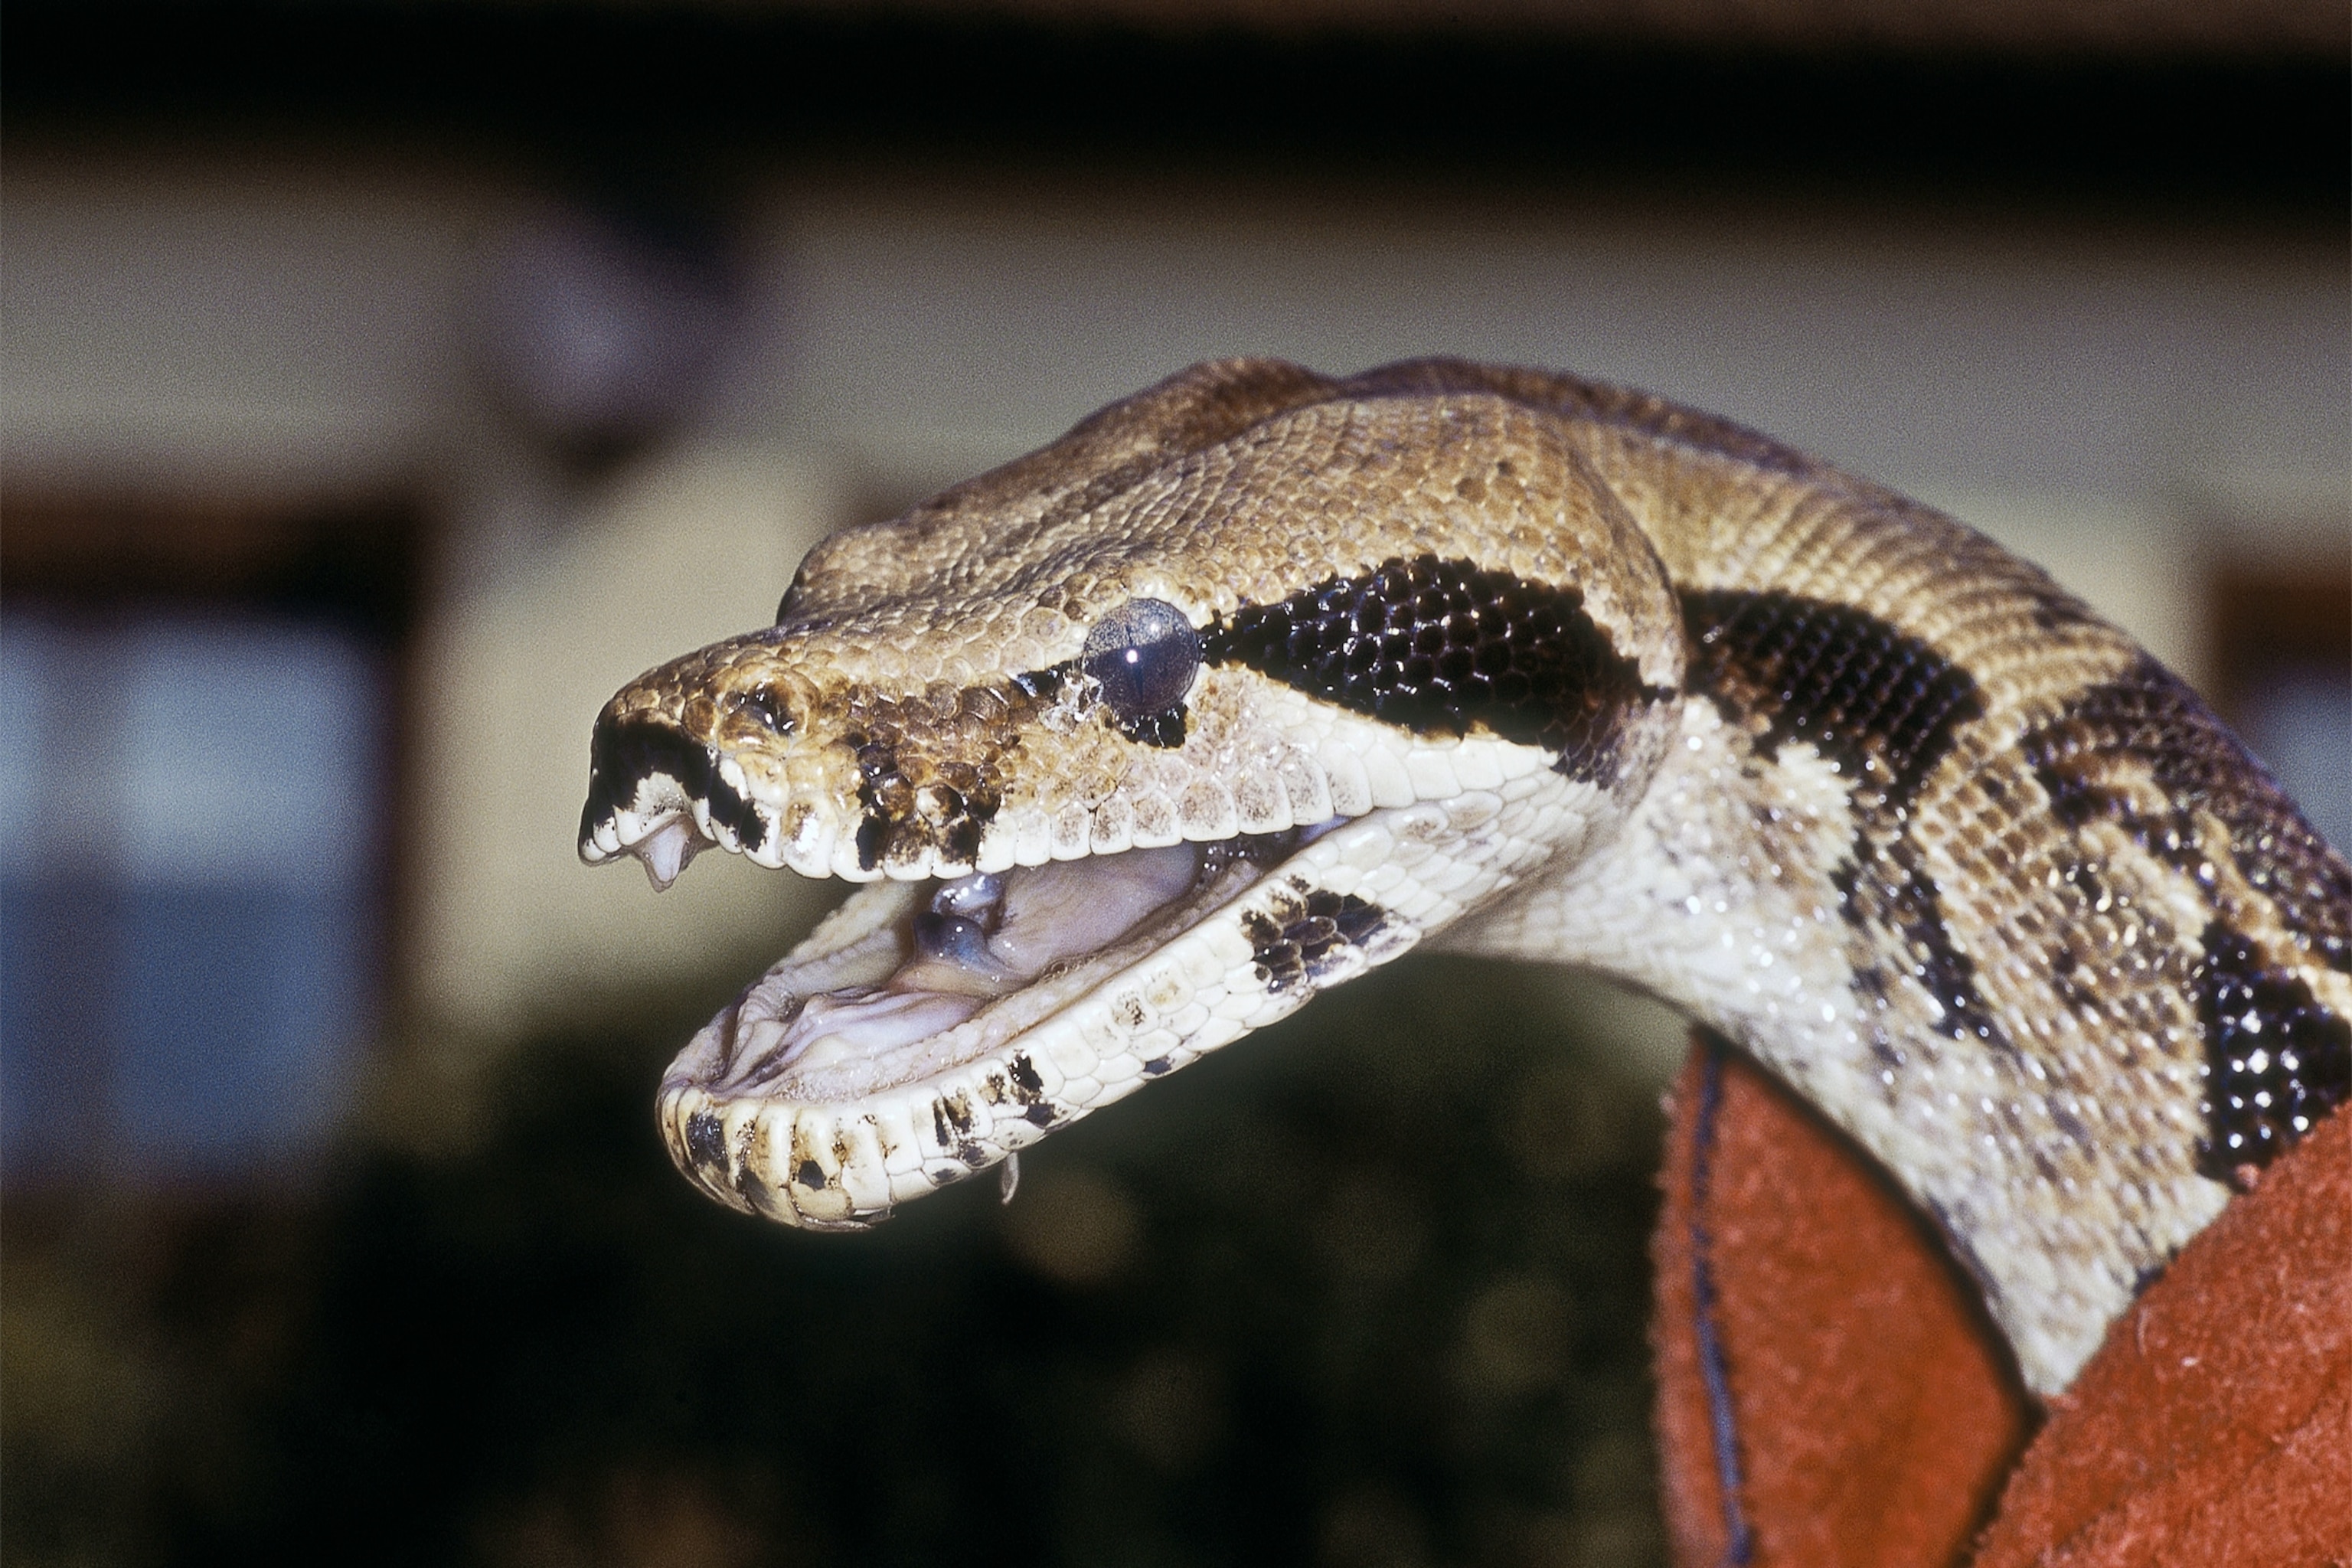 Potential Risks Of Stargazing In Snakes